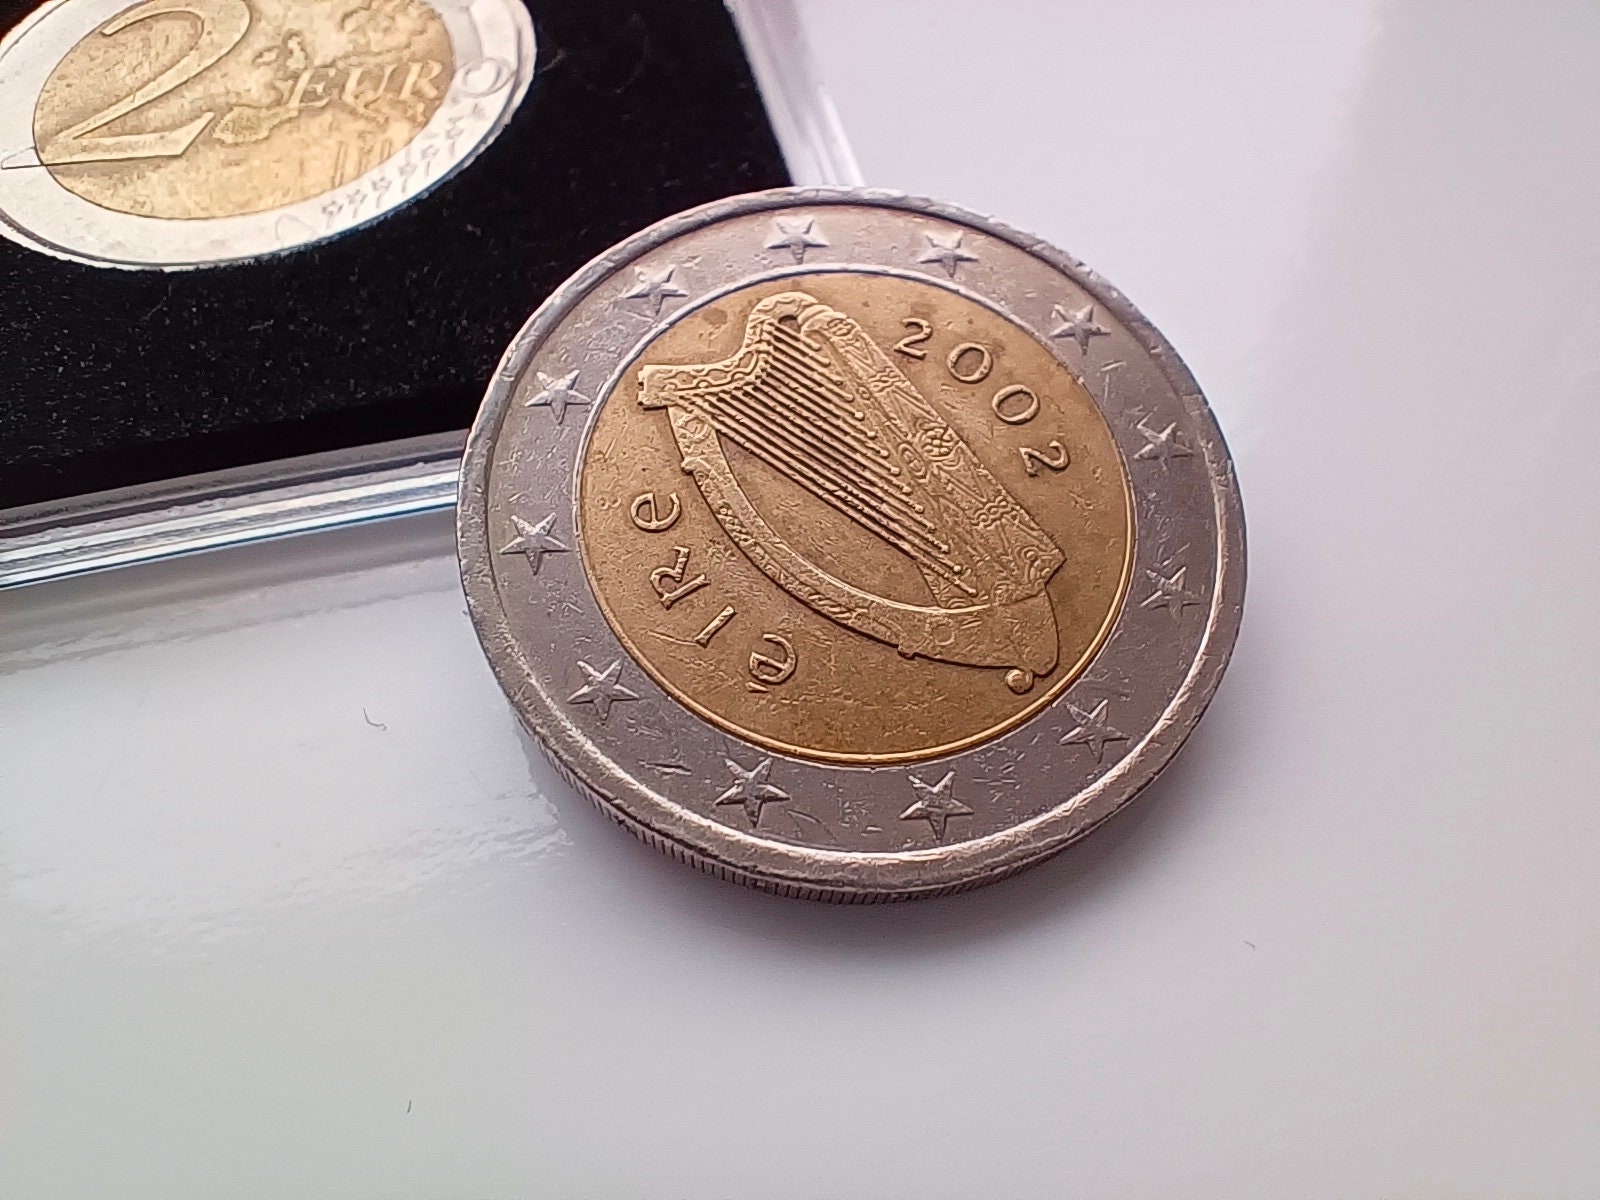 1 Cent 2002 - Present - Ireland Coins